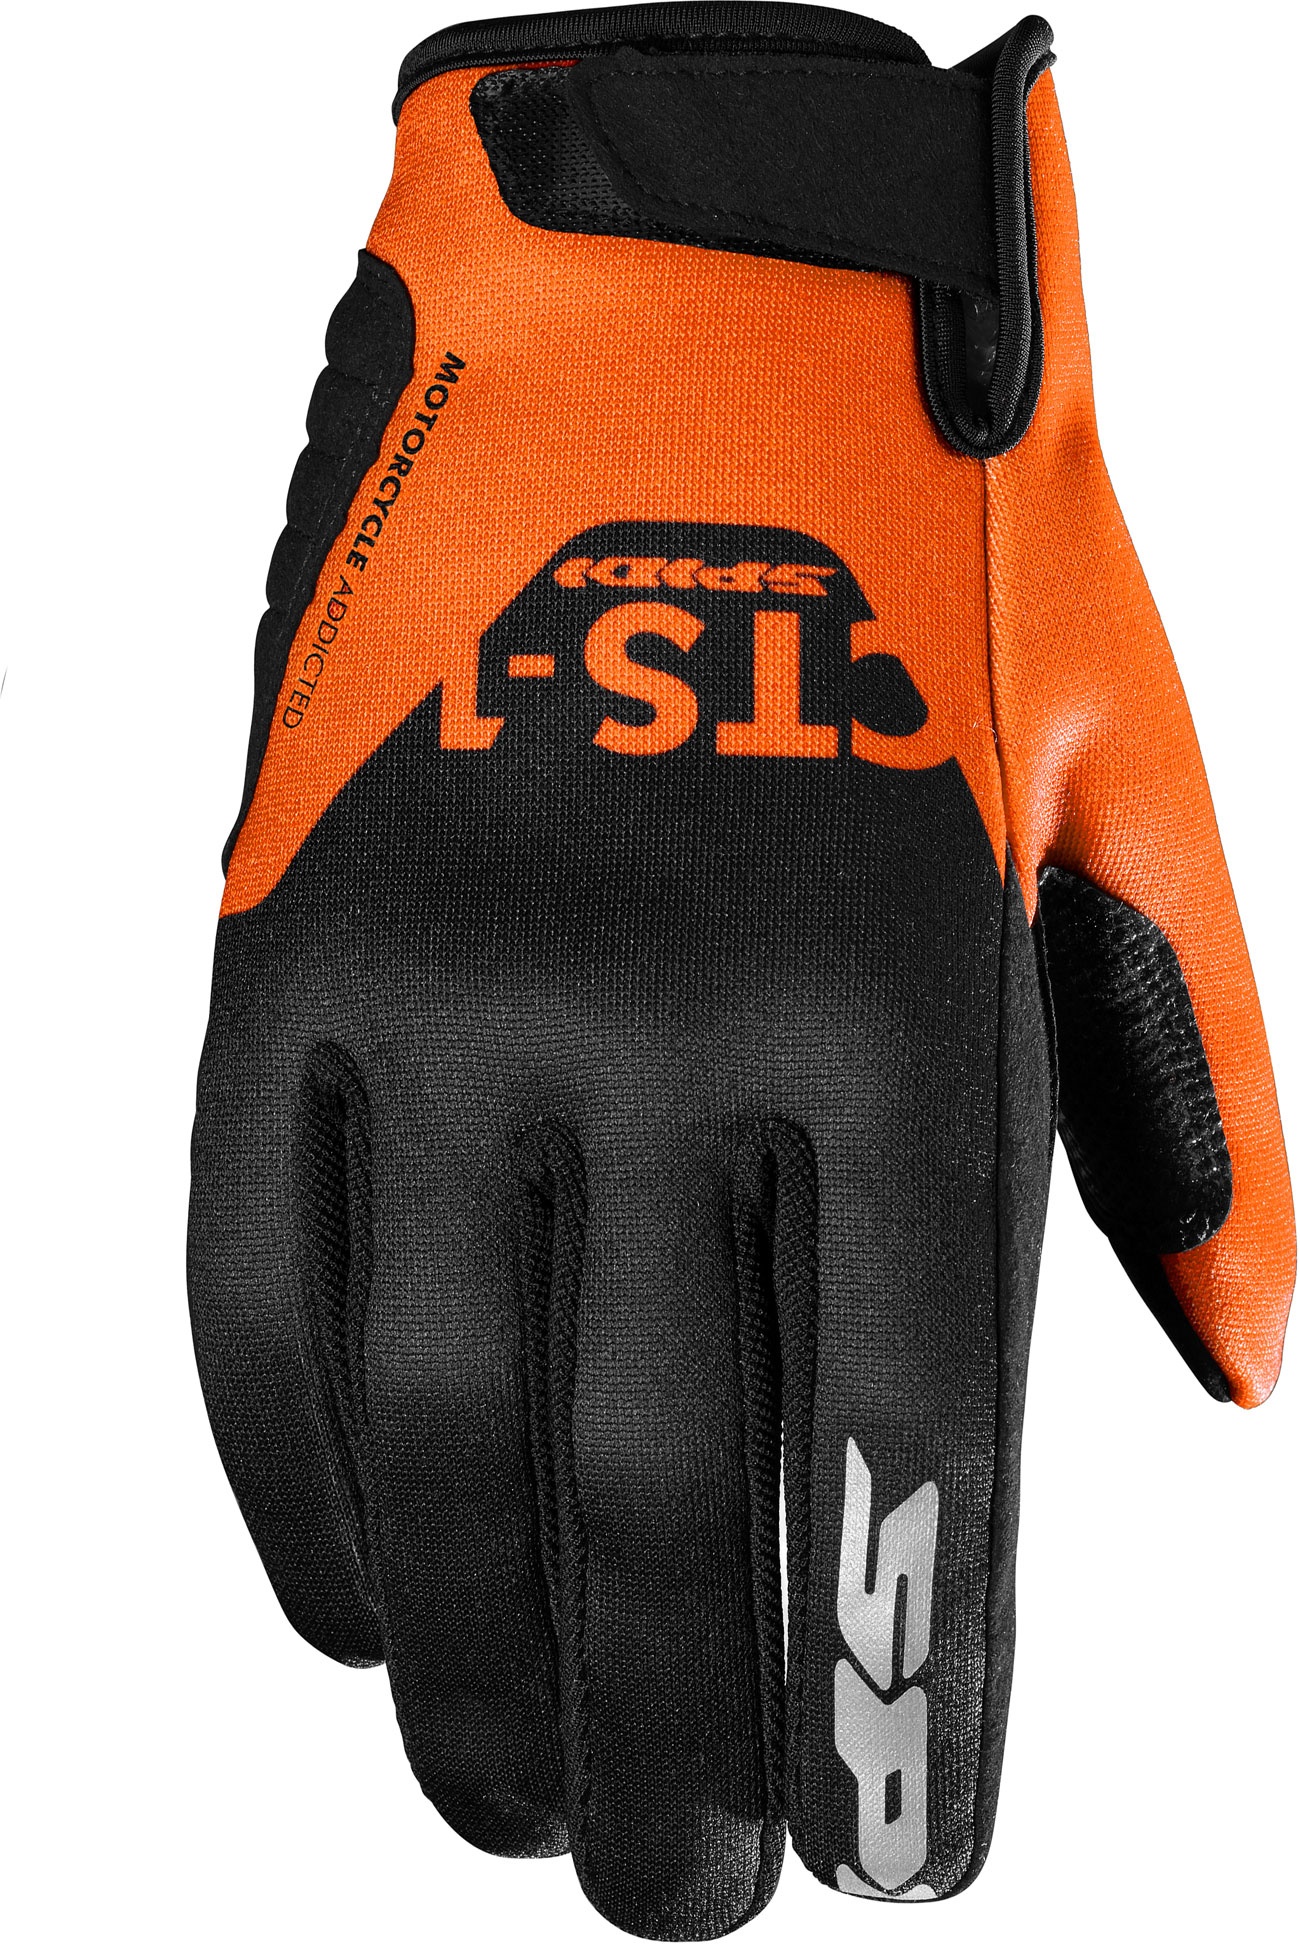 Spidi CTS-1, gants - Noir/Orange - XXL